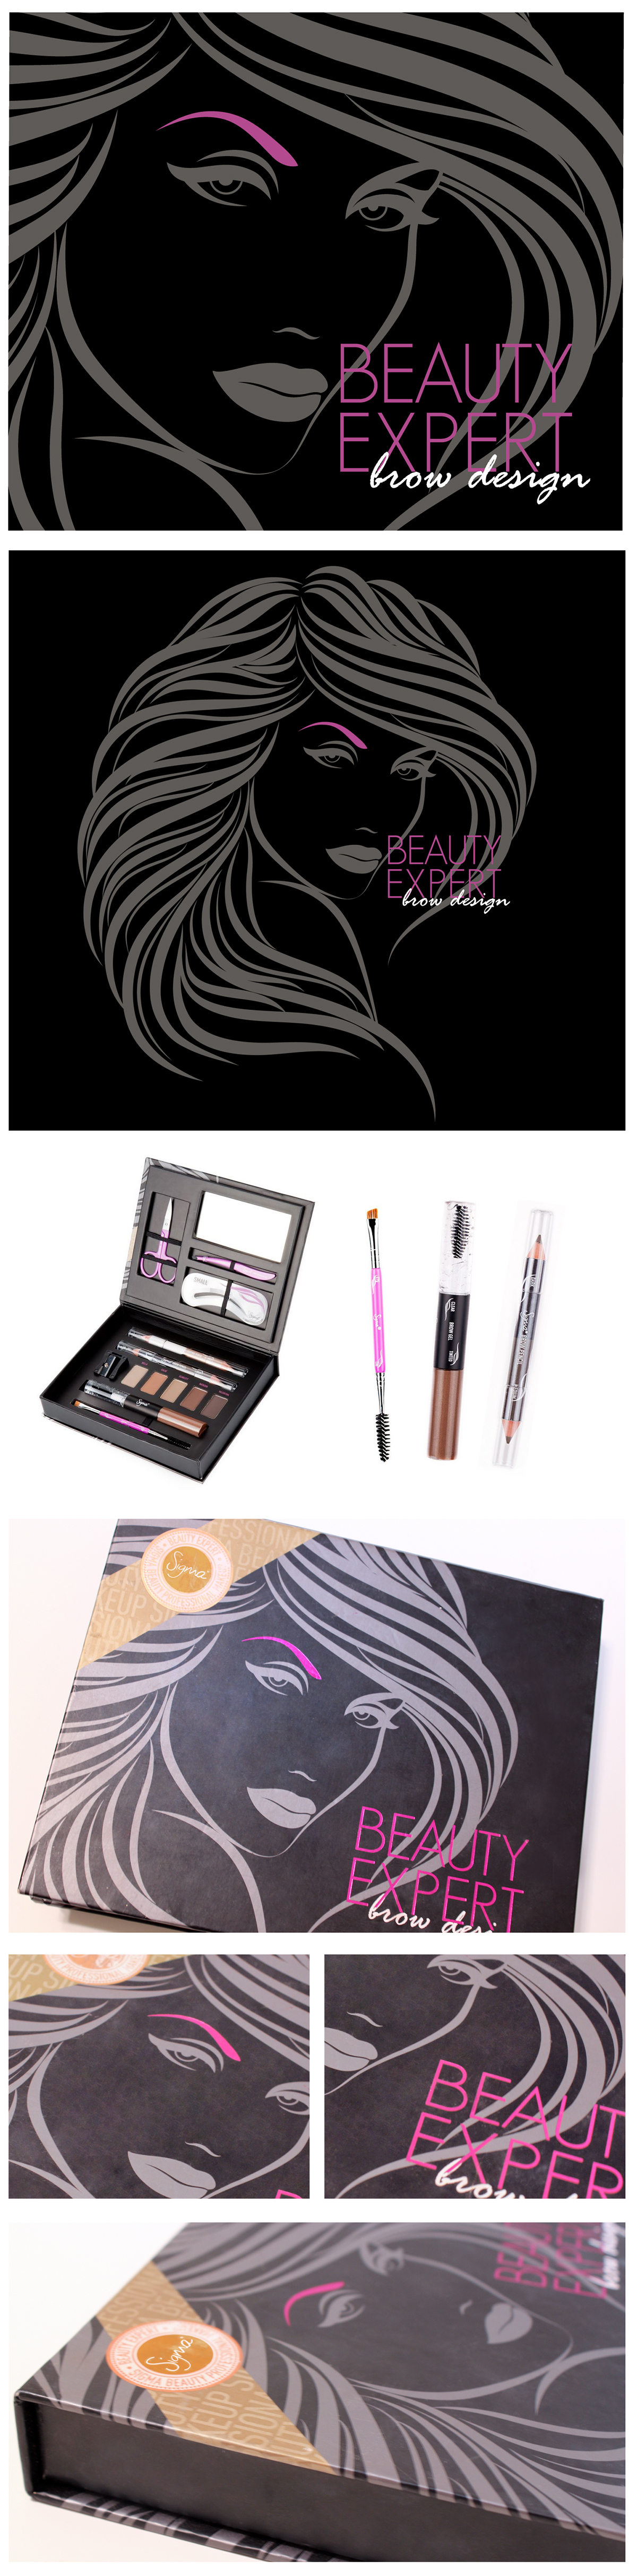 package makeup sigmabeauty beautyexpert palette design graphicdesign